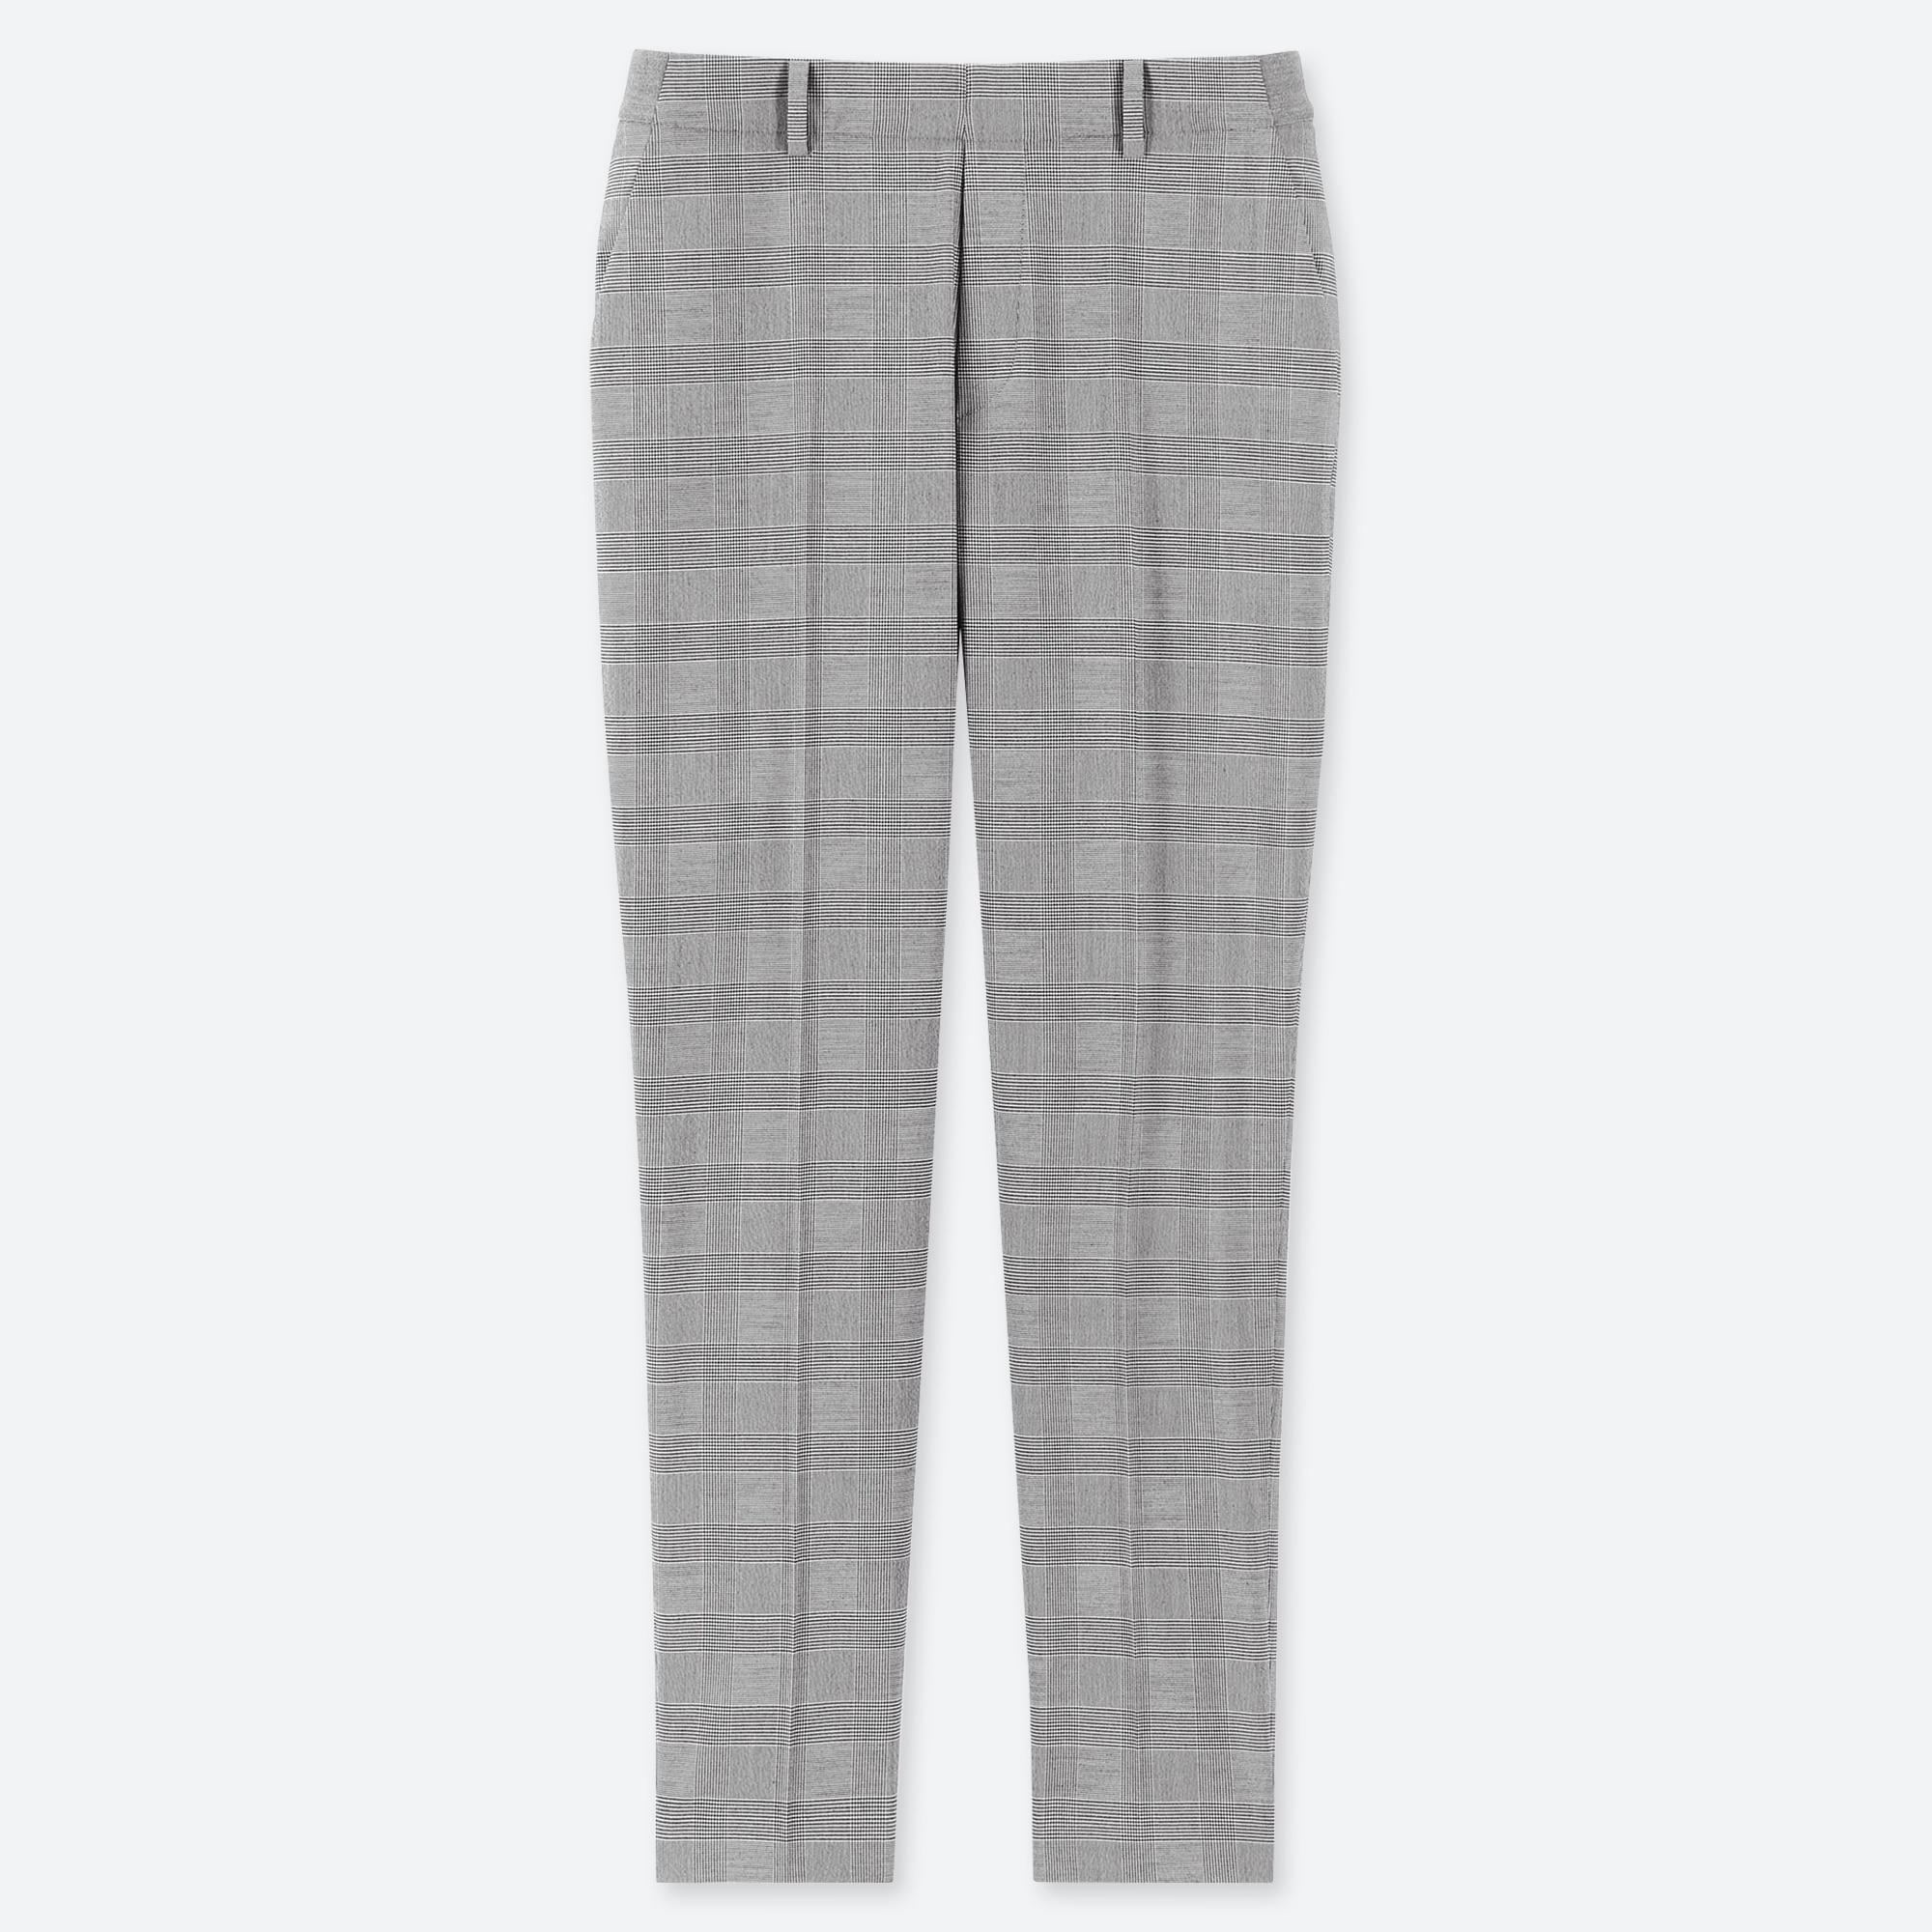 uniqlo checkered pants